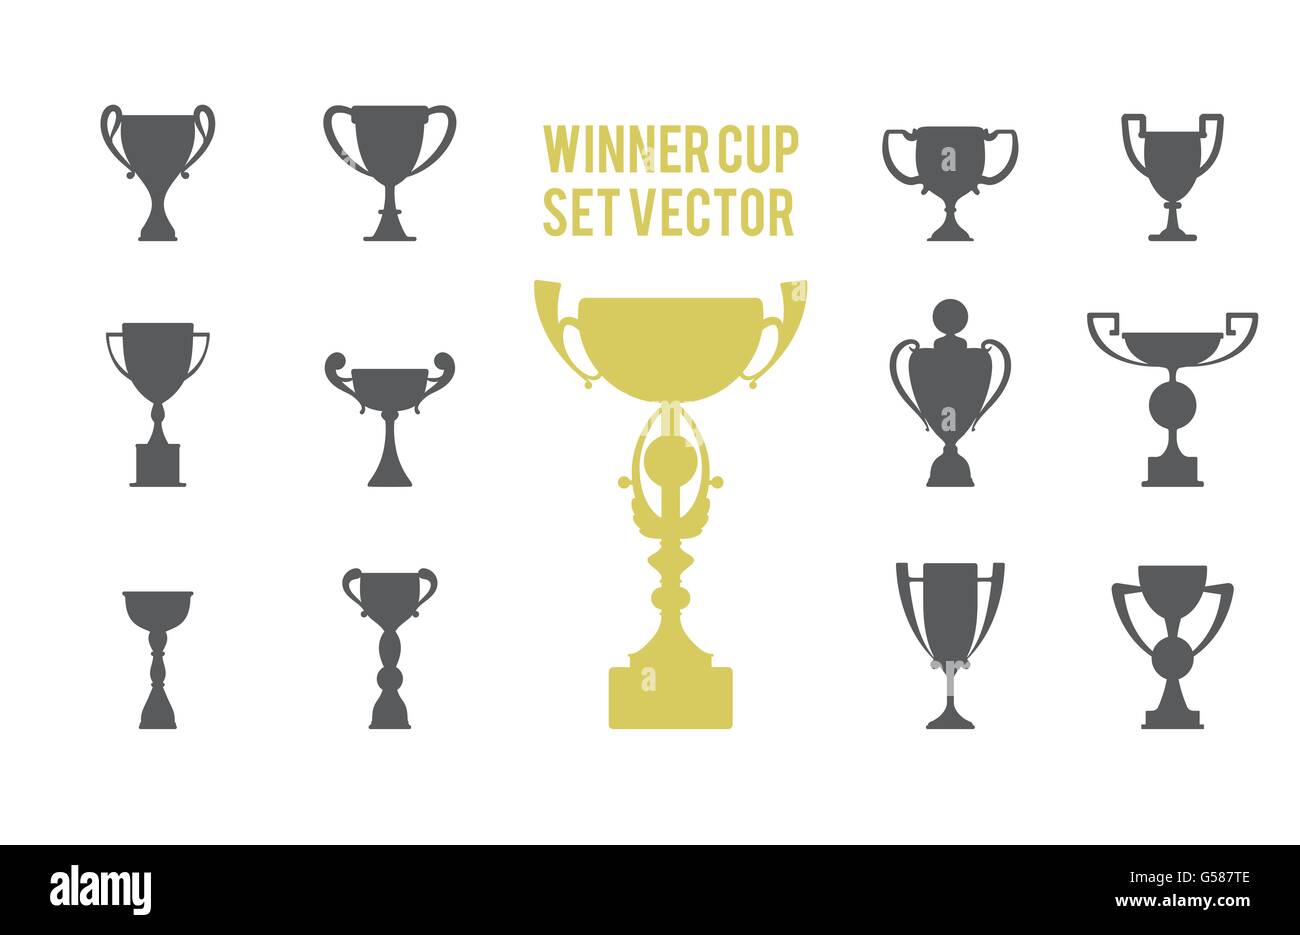 winner cup icon set championship reward vector Stock Vector